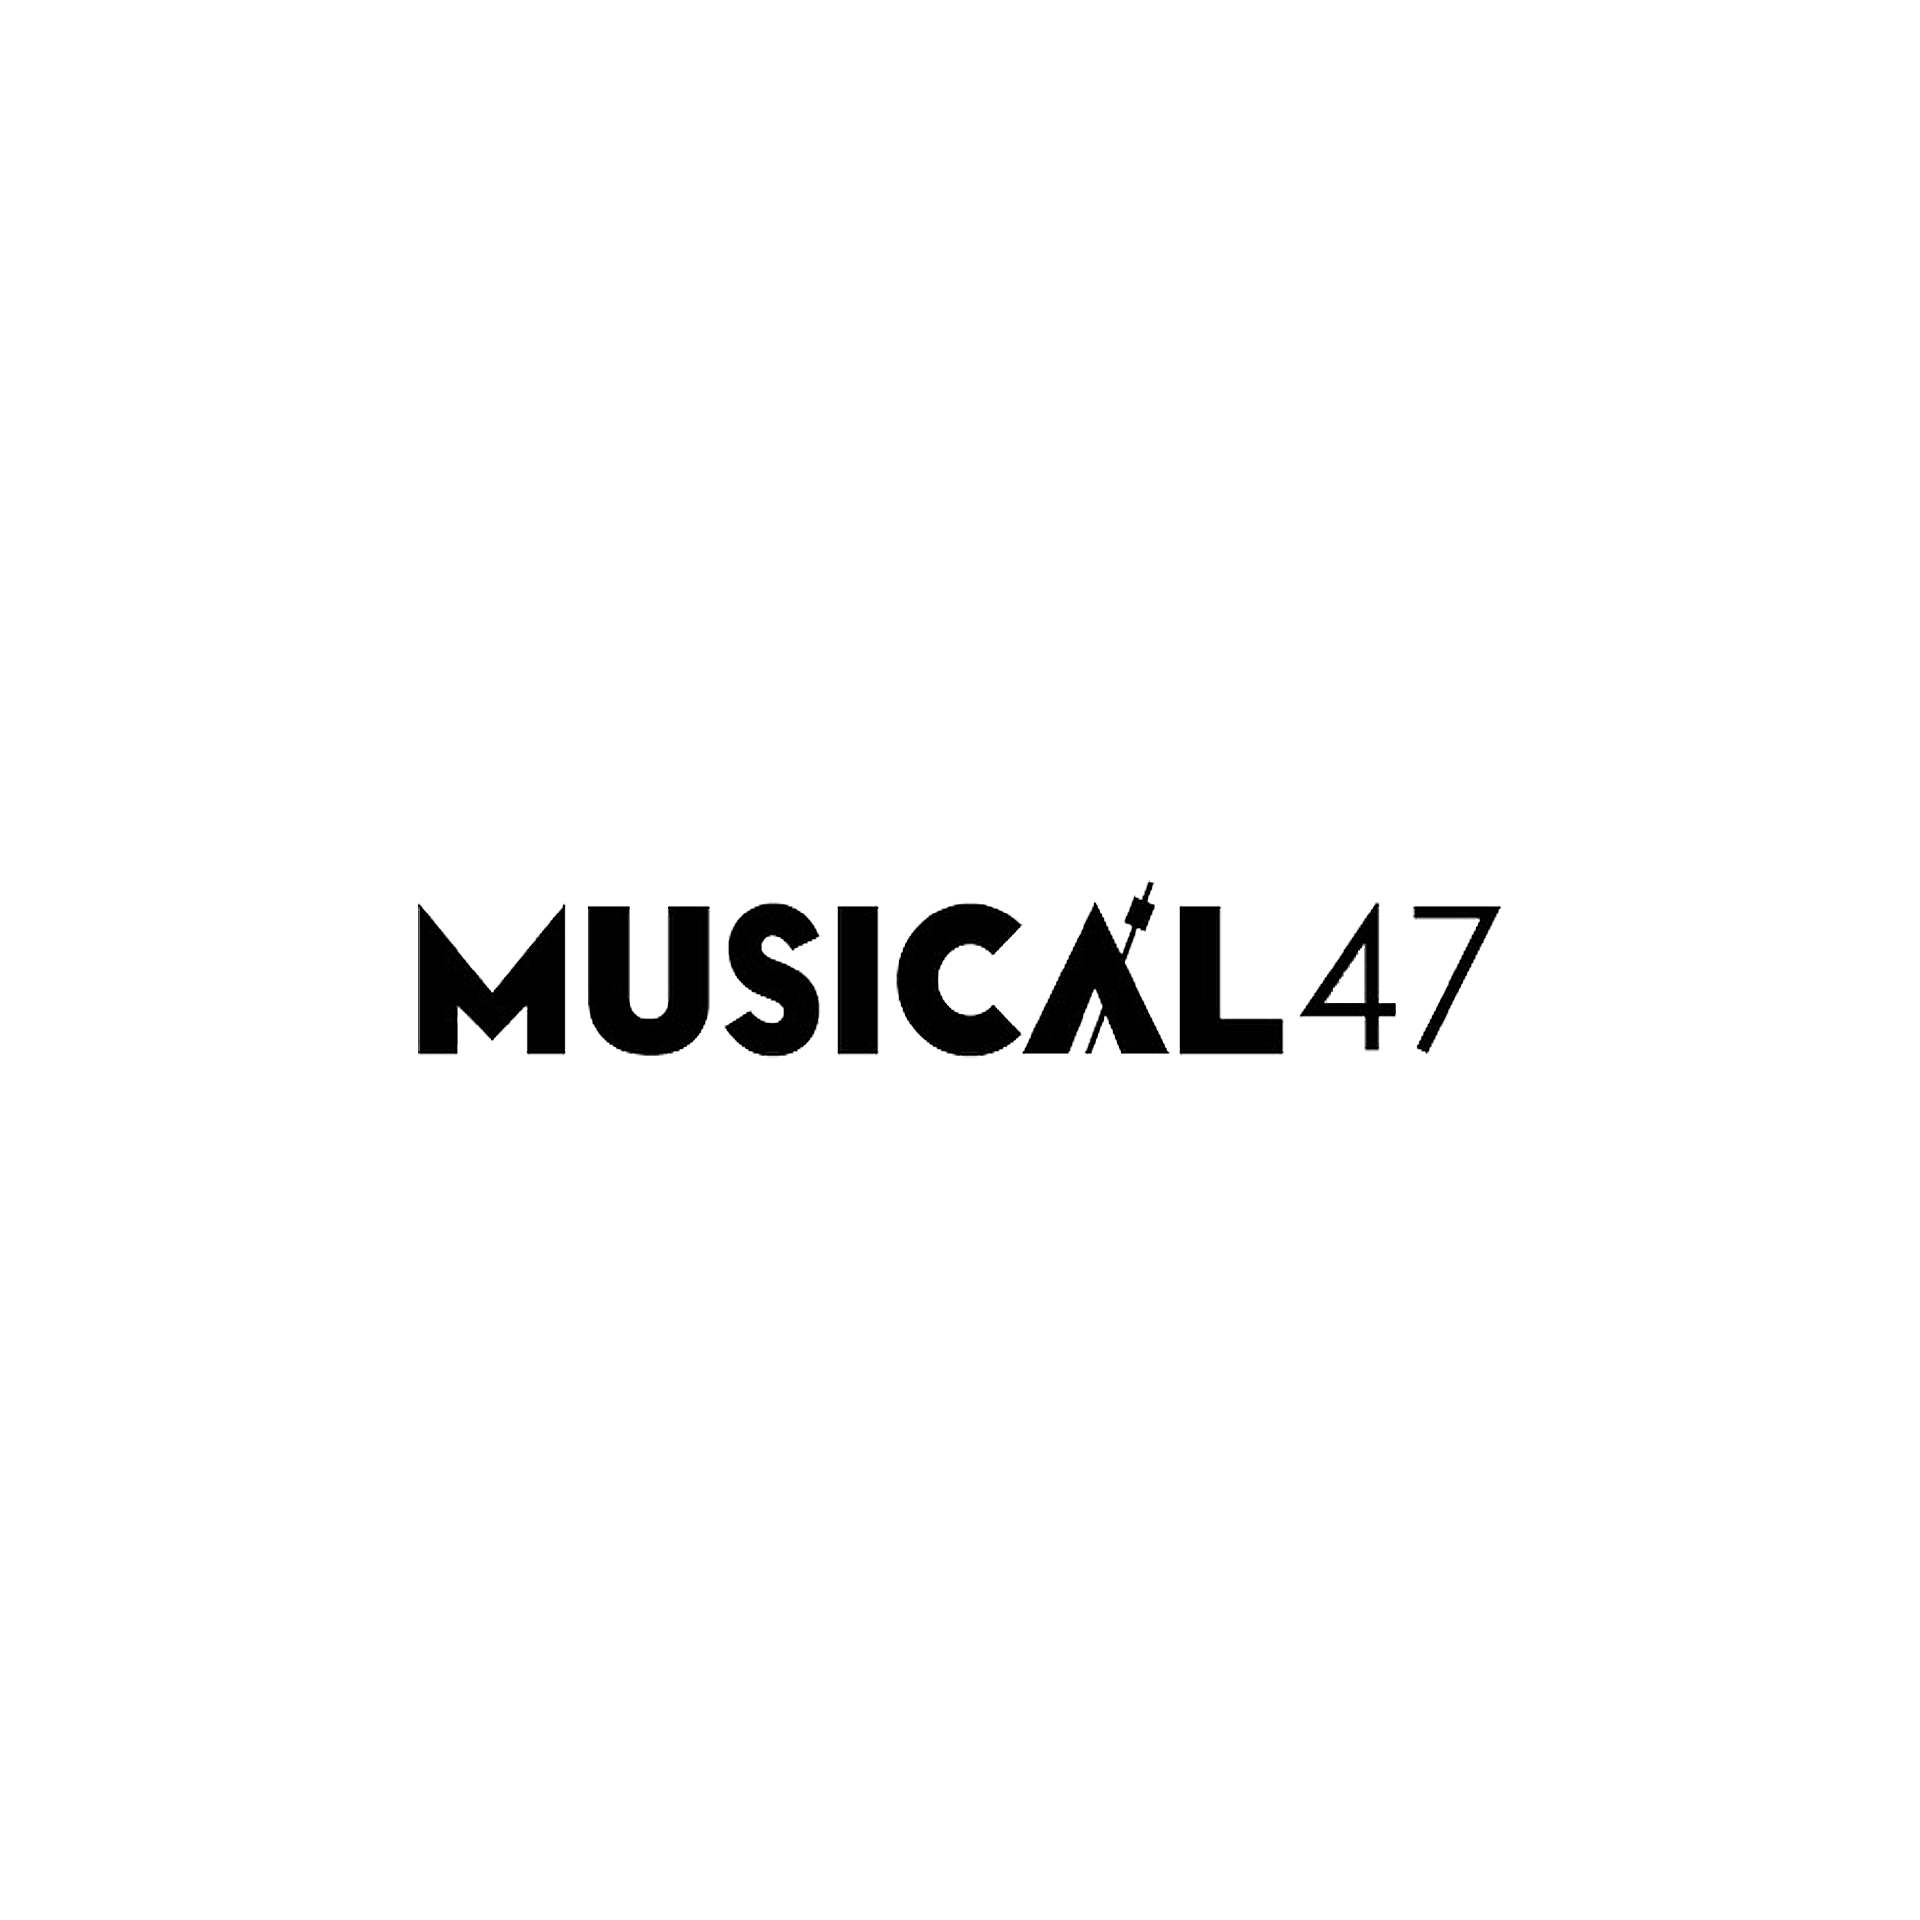 Musical 47 Logo